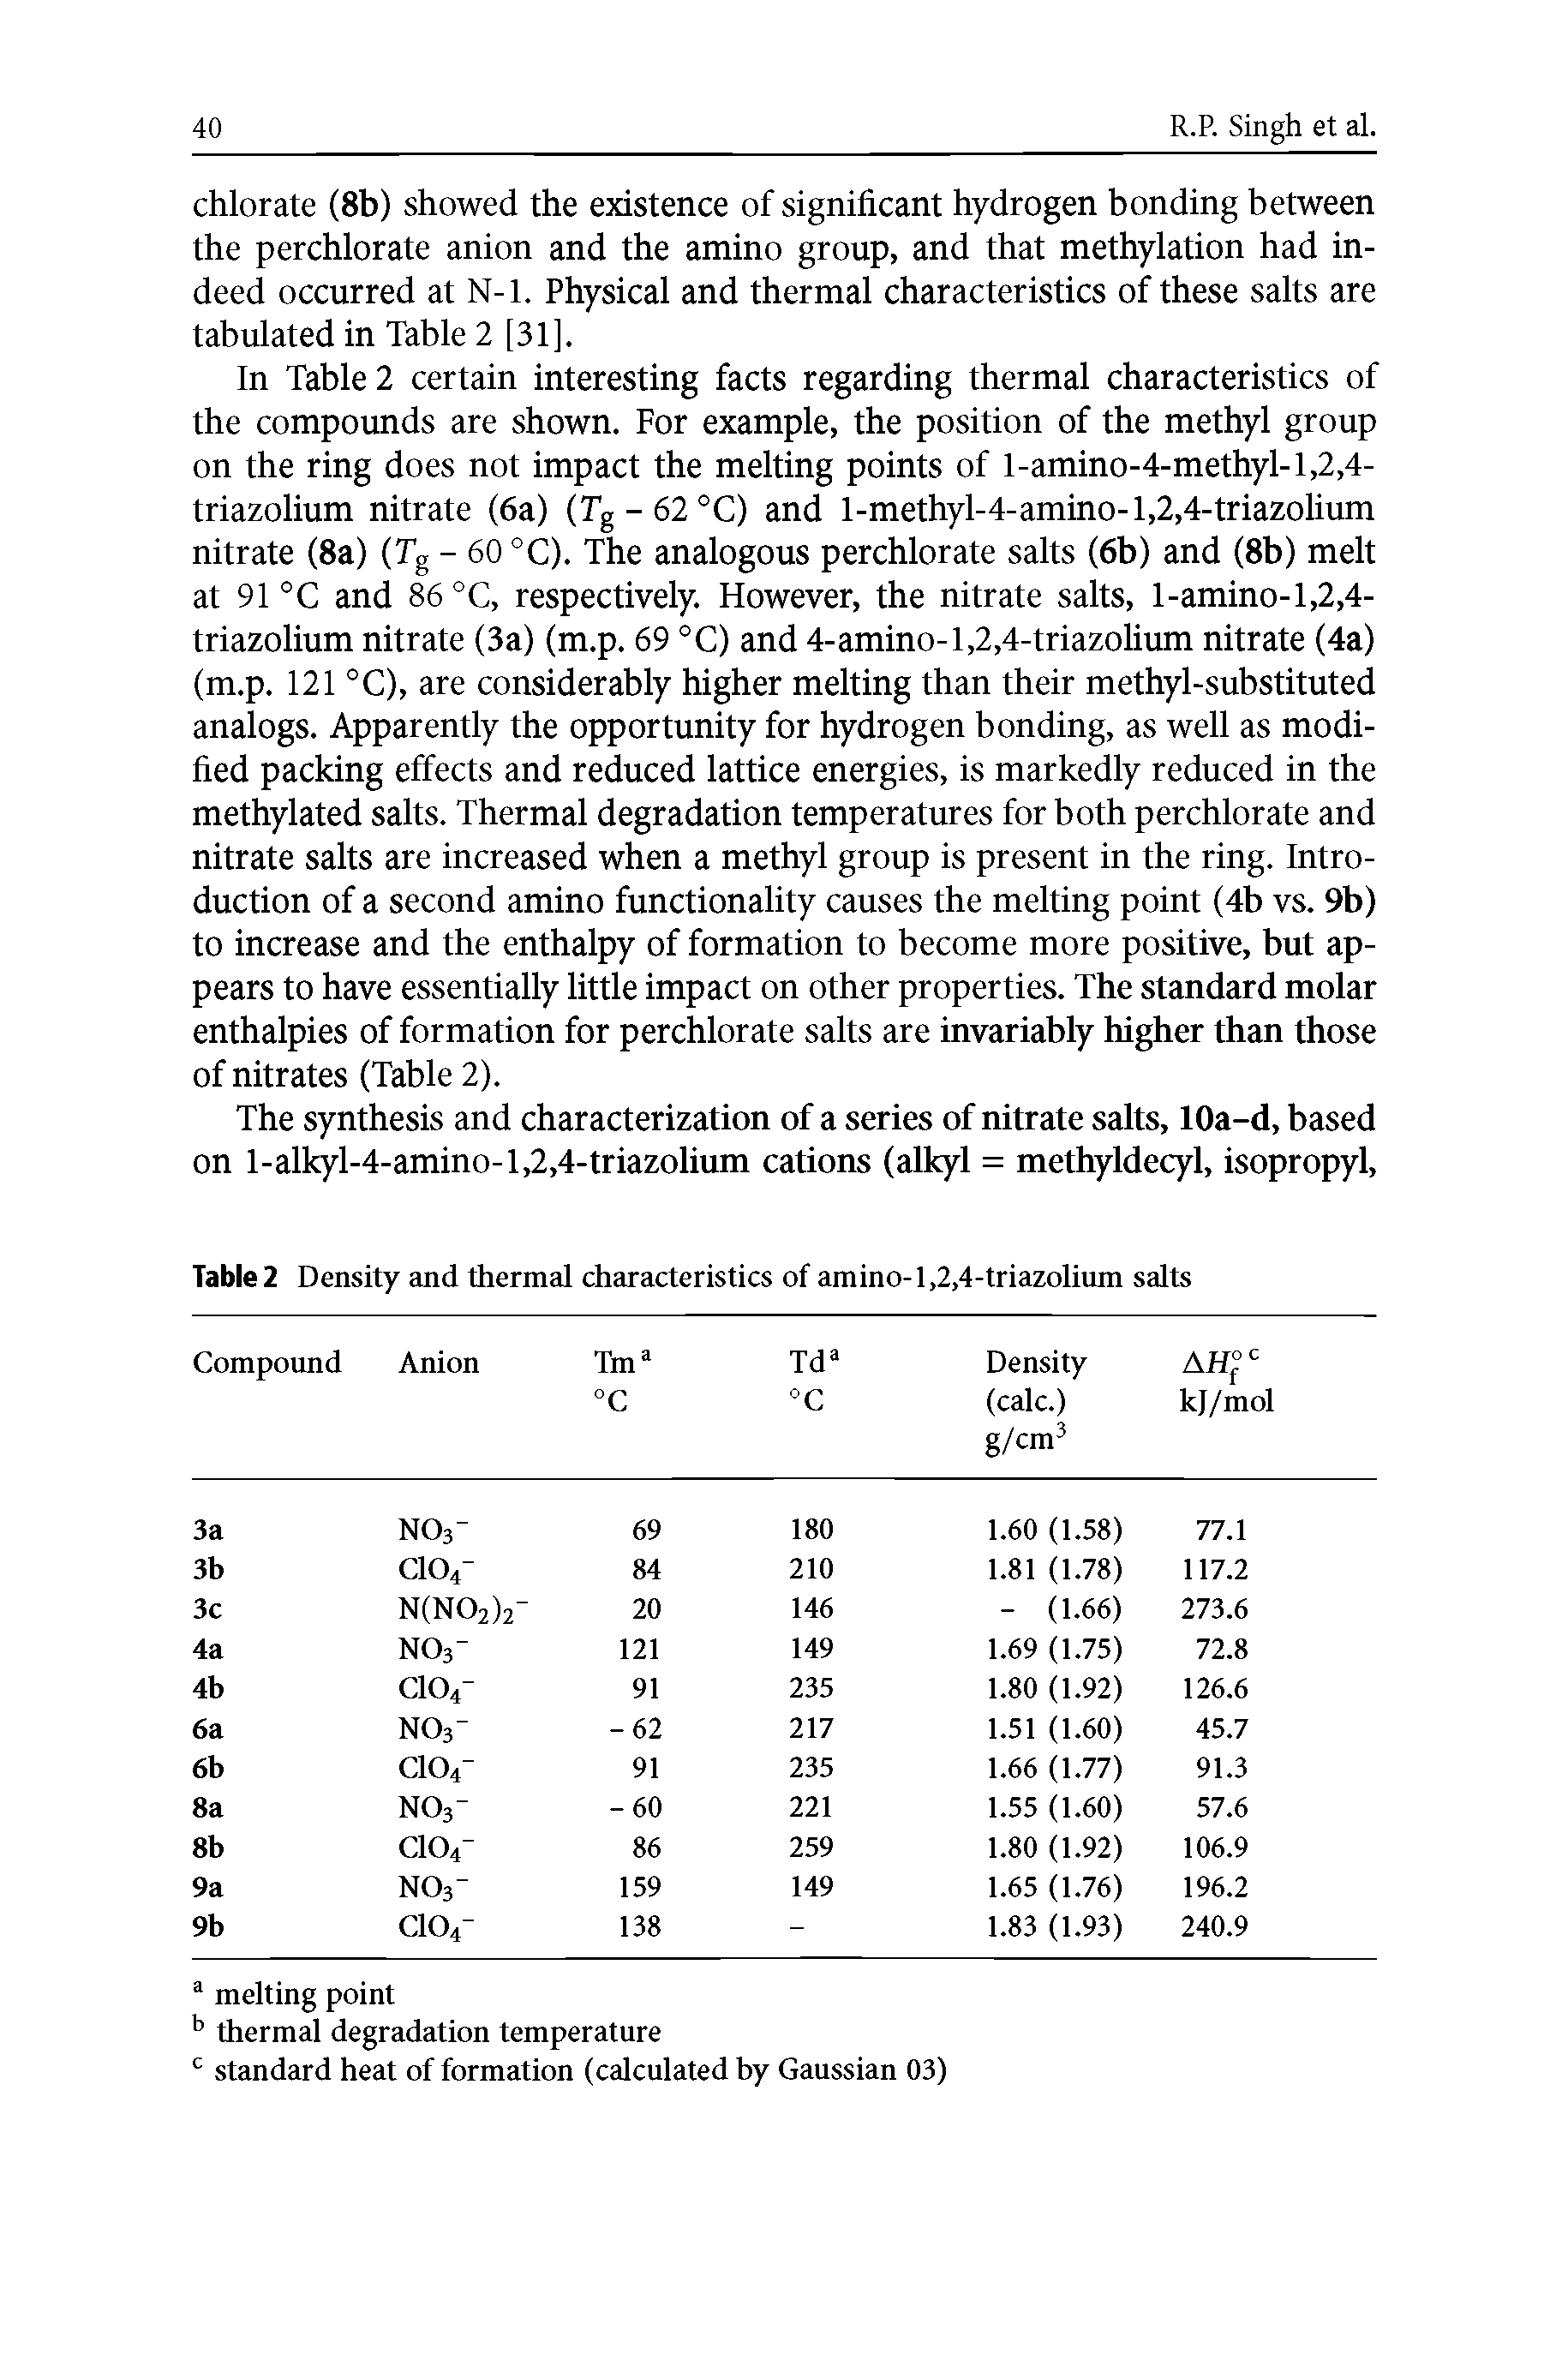 Table 2 Density and thermal characteristics of amino-1,2,4-triazolium salts...